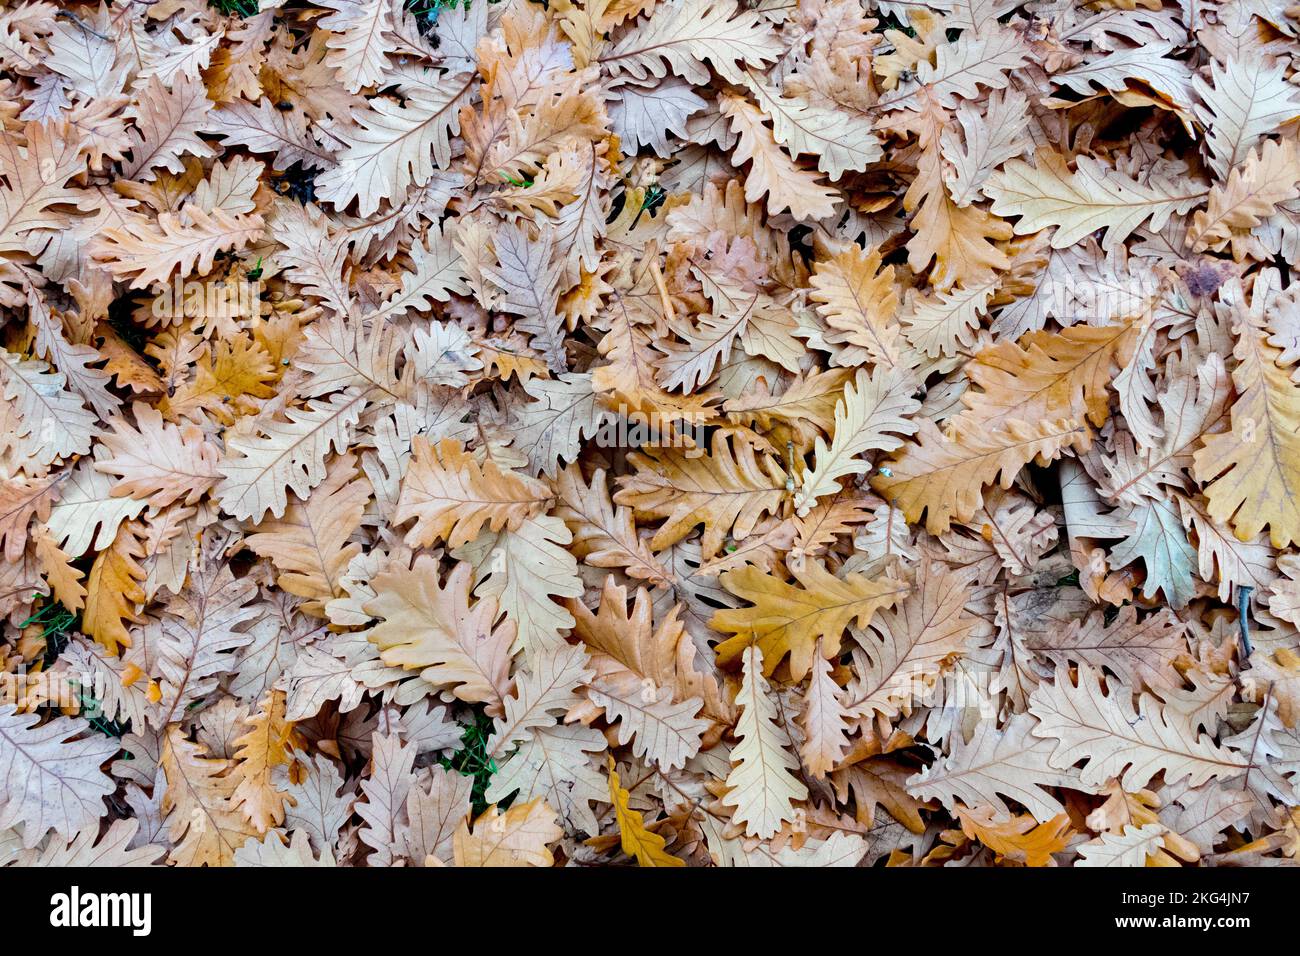 Oak leaves fallen on the ground Autumn background Stock Photo